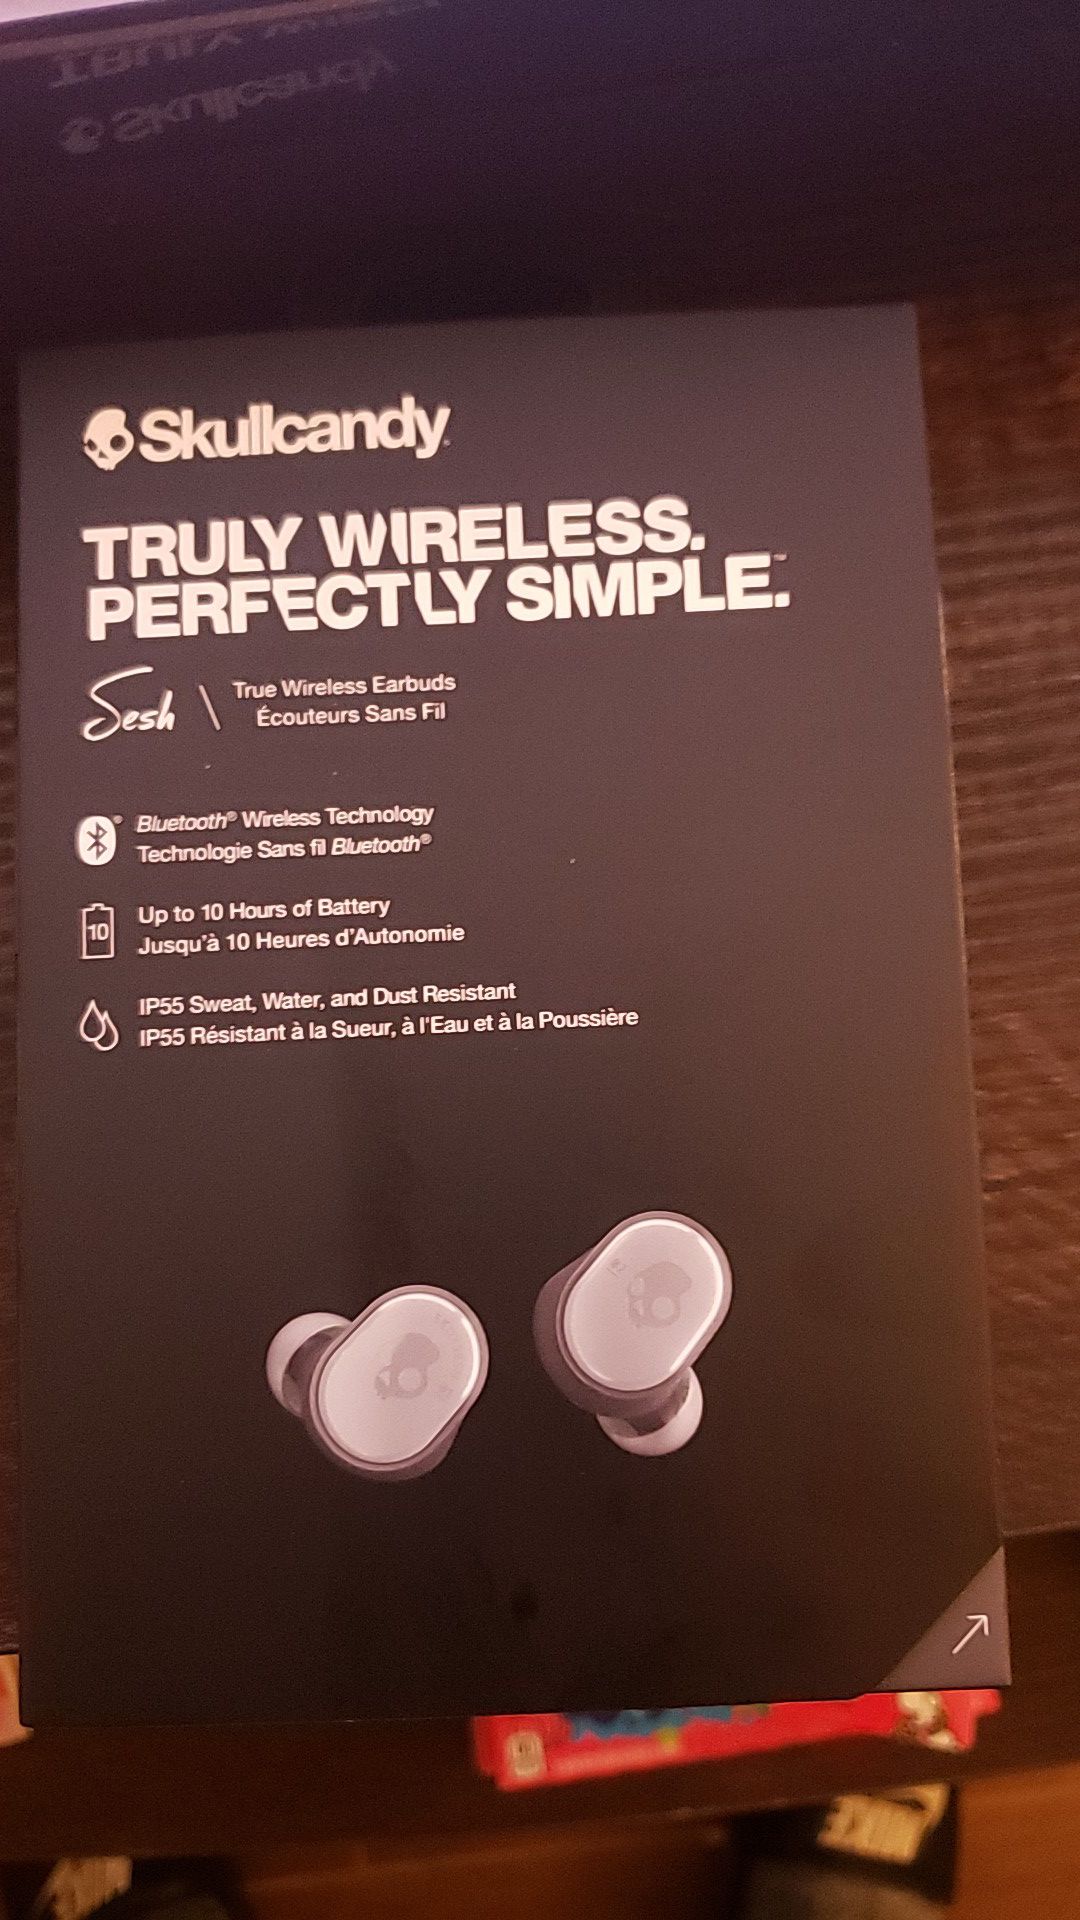 Skullcandy truly wireless earbuds